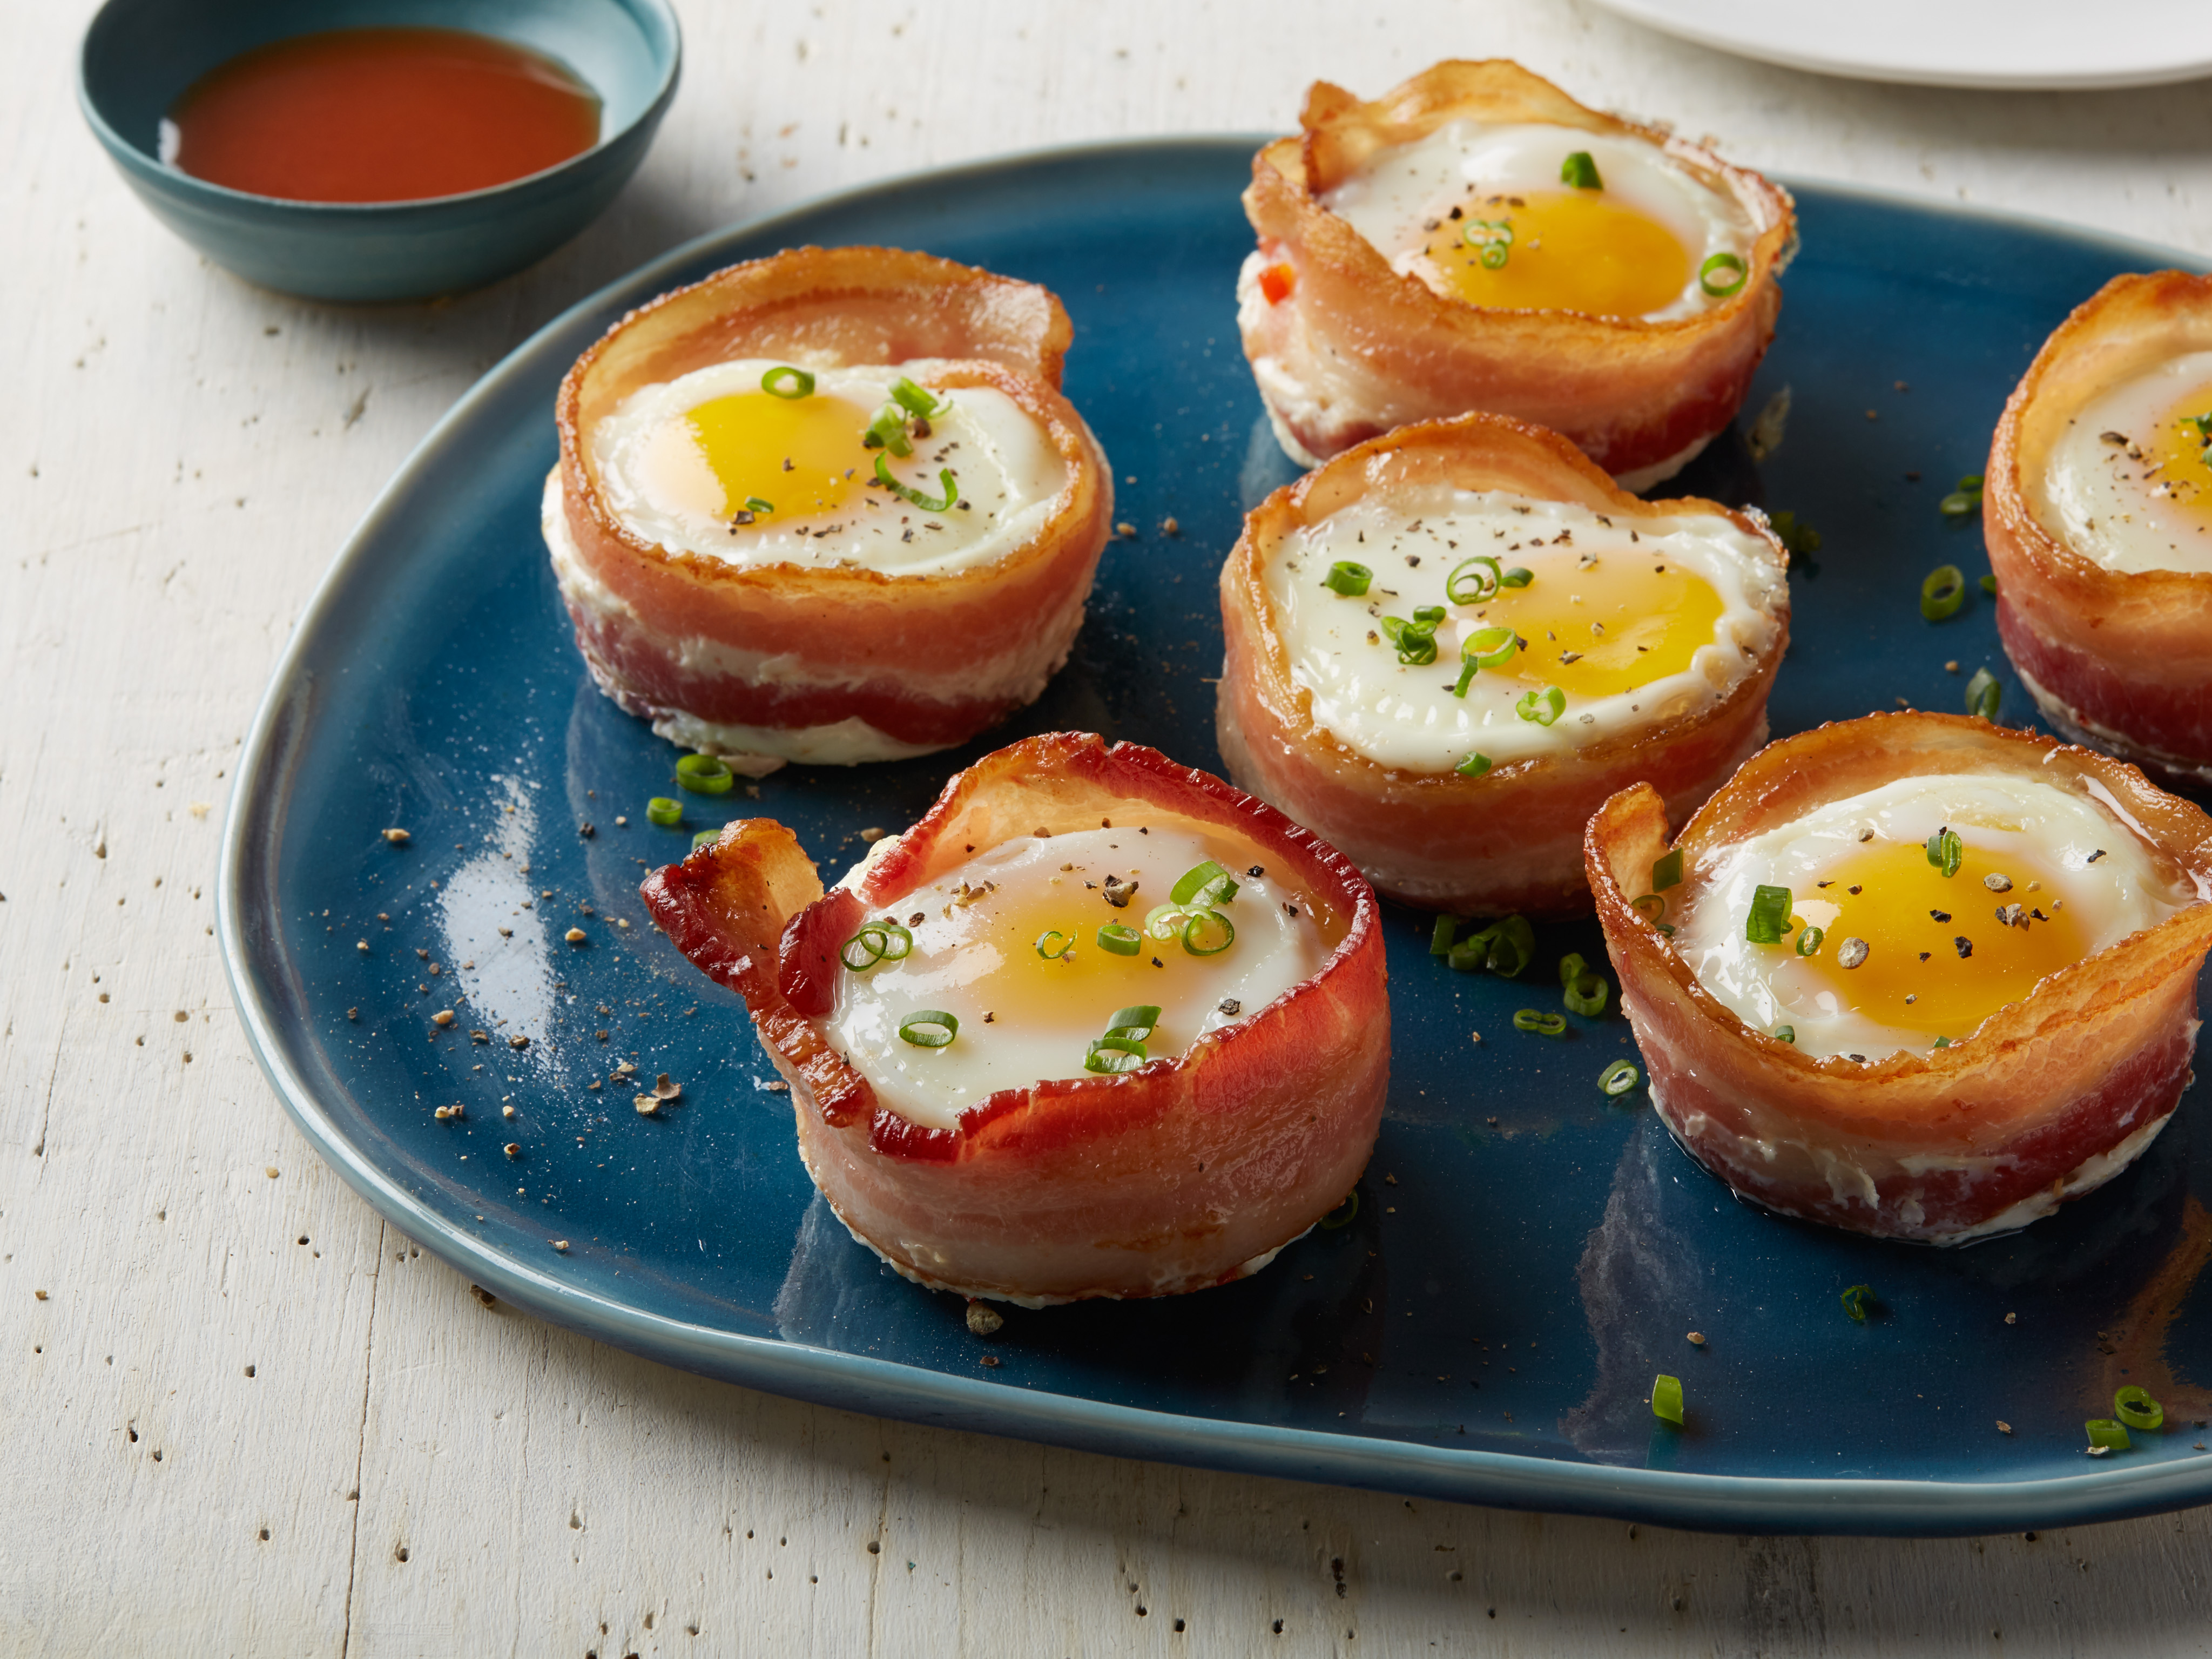 https://www.foodnetwork.com/content/dam/images/food/fullset/2017/11/9/0/FNK_Whole30-Bacon-Egg-Cups_s4x3.jpg